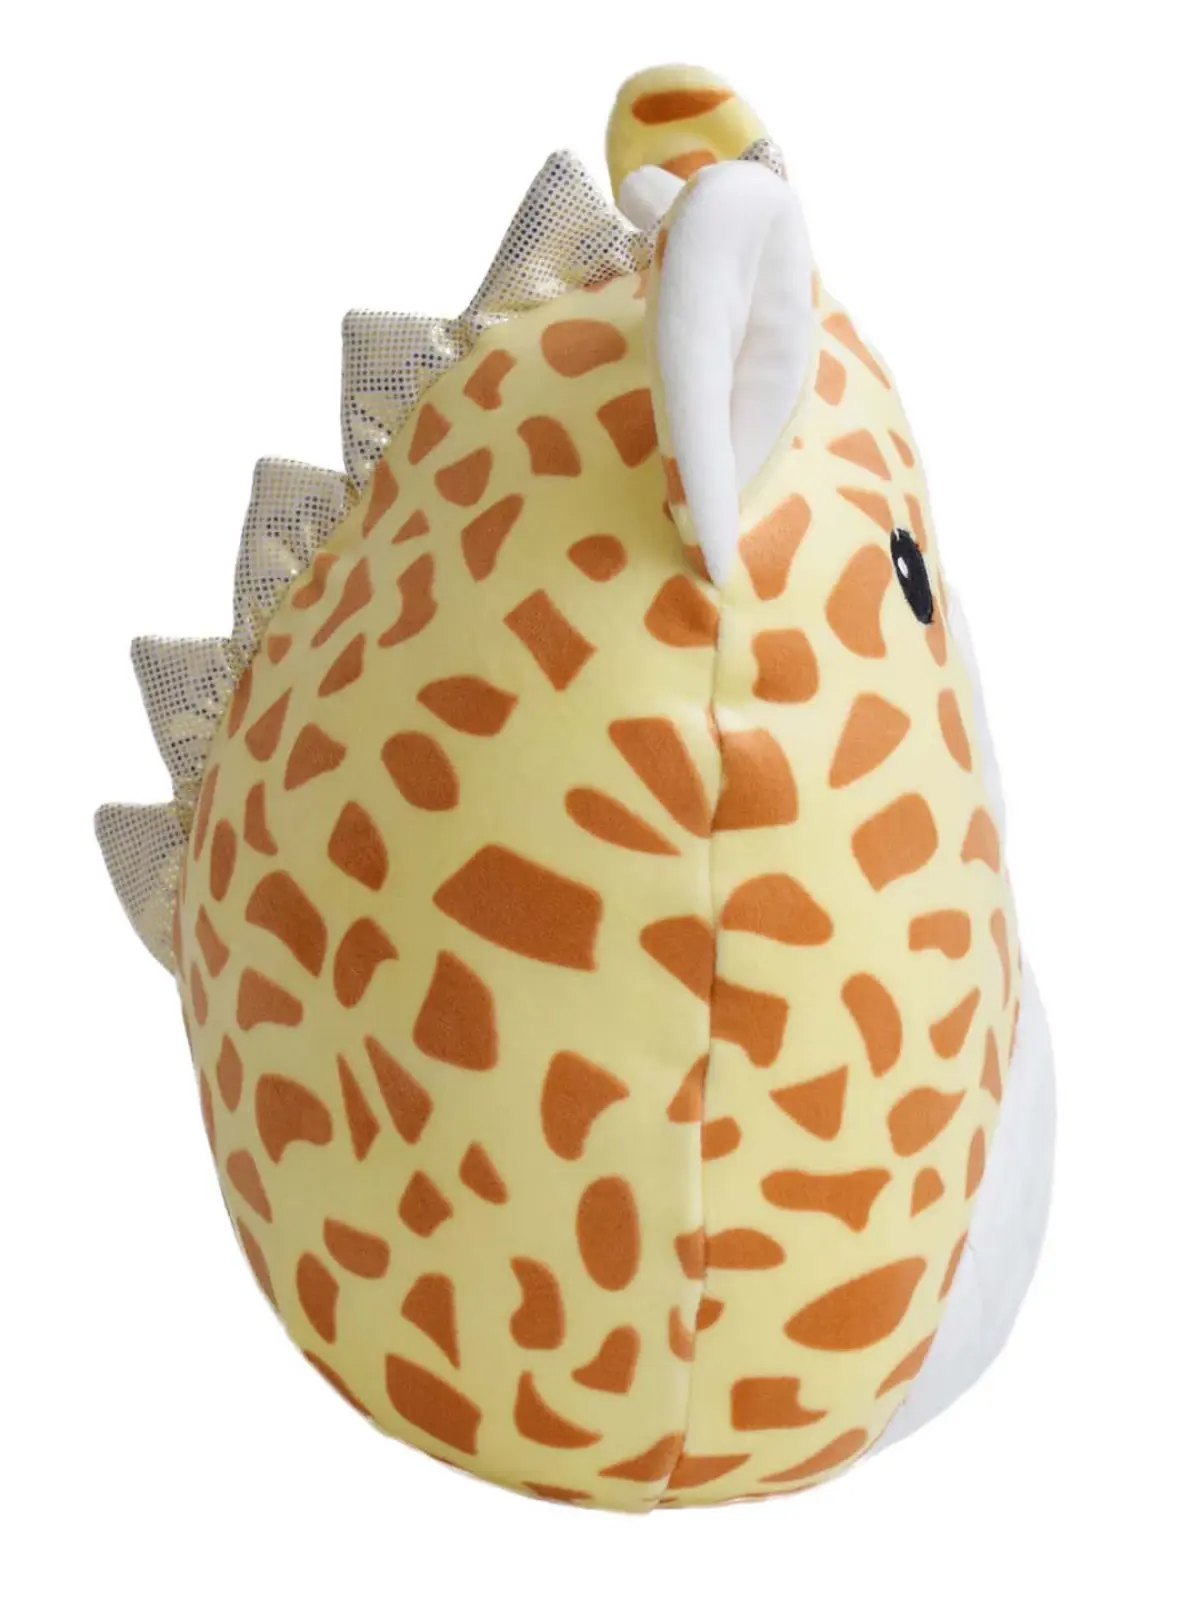 Cute Stuffed Huggable Supersoft Giraffe Plush Cushion By Mirada, 30Cm, Yellow